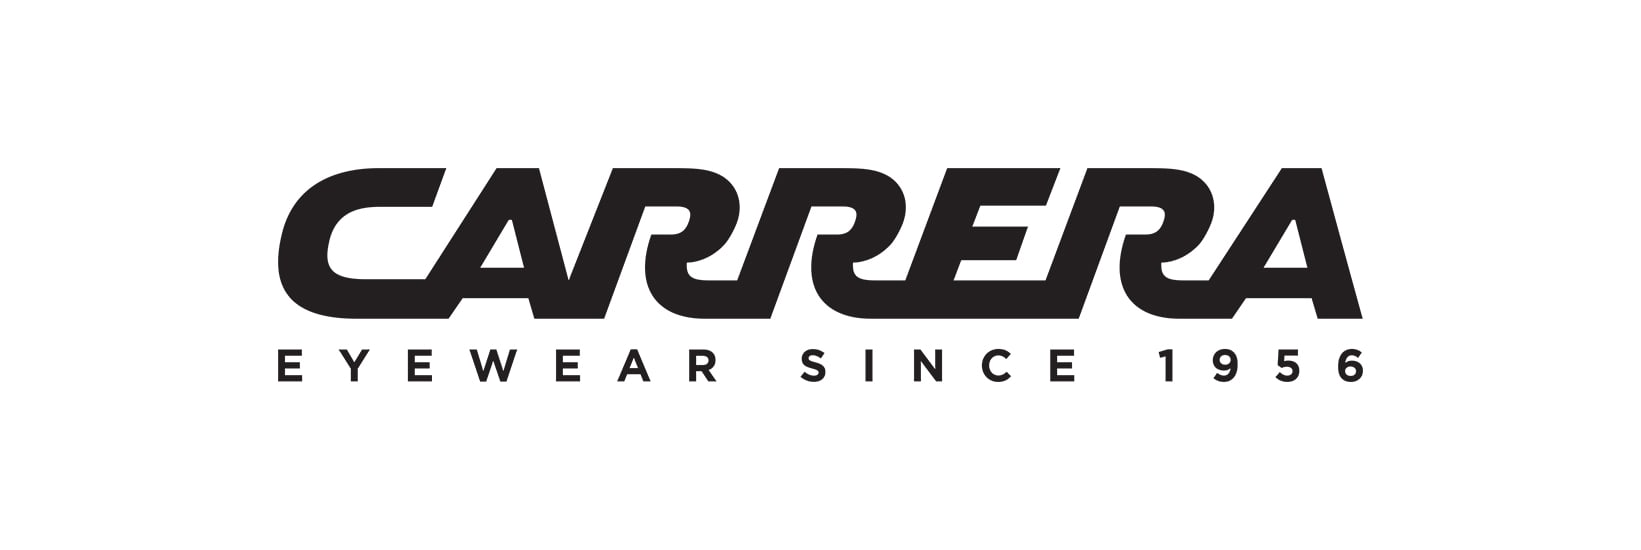 Carerra logo image